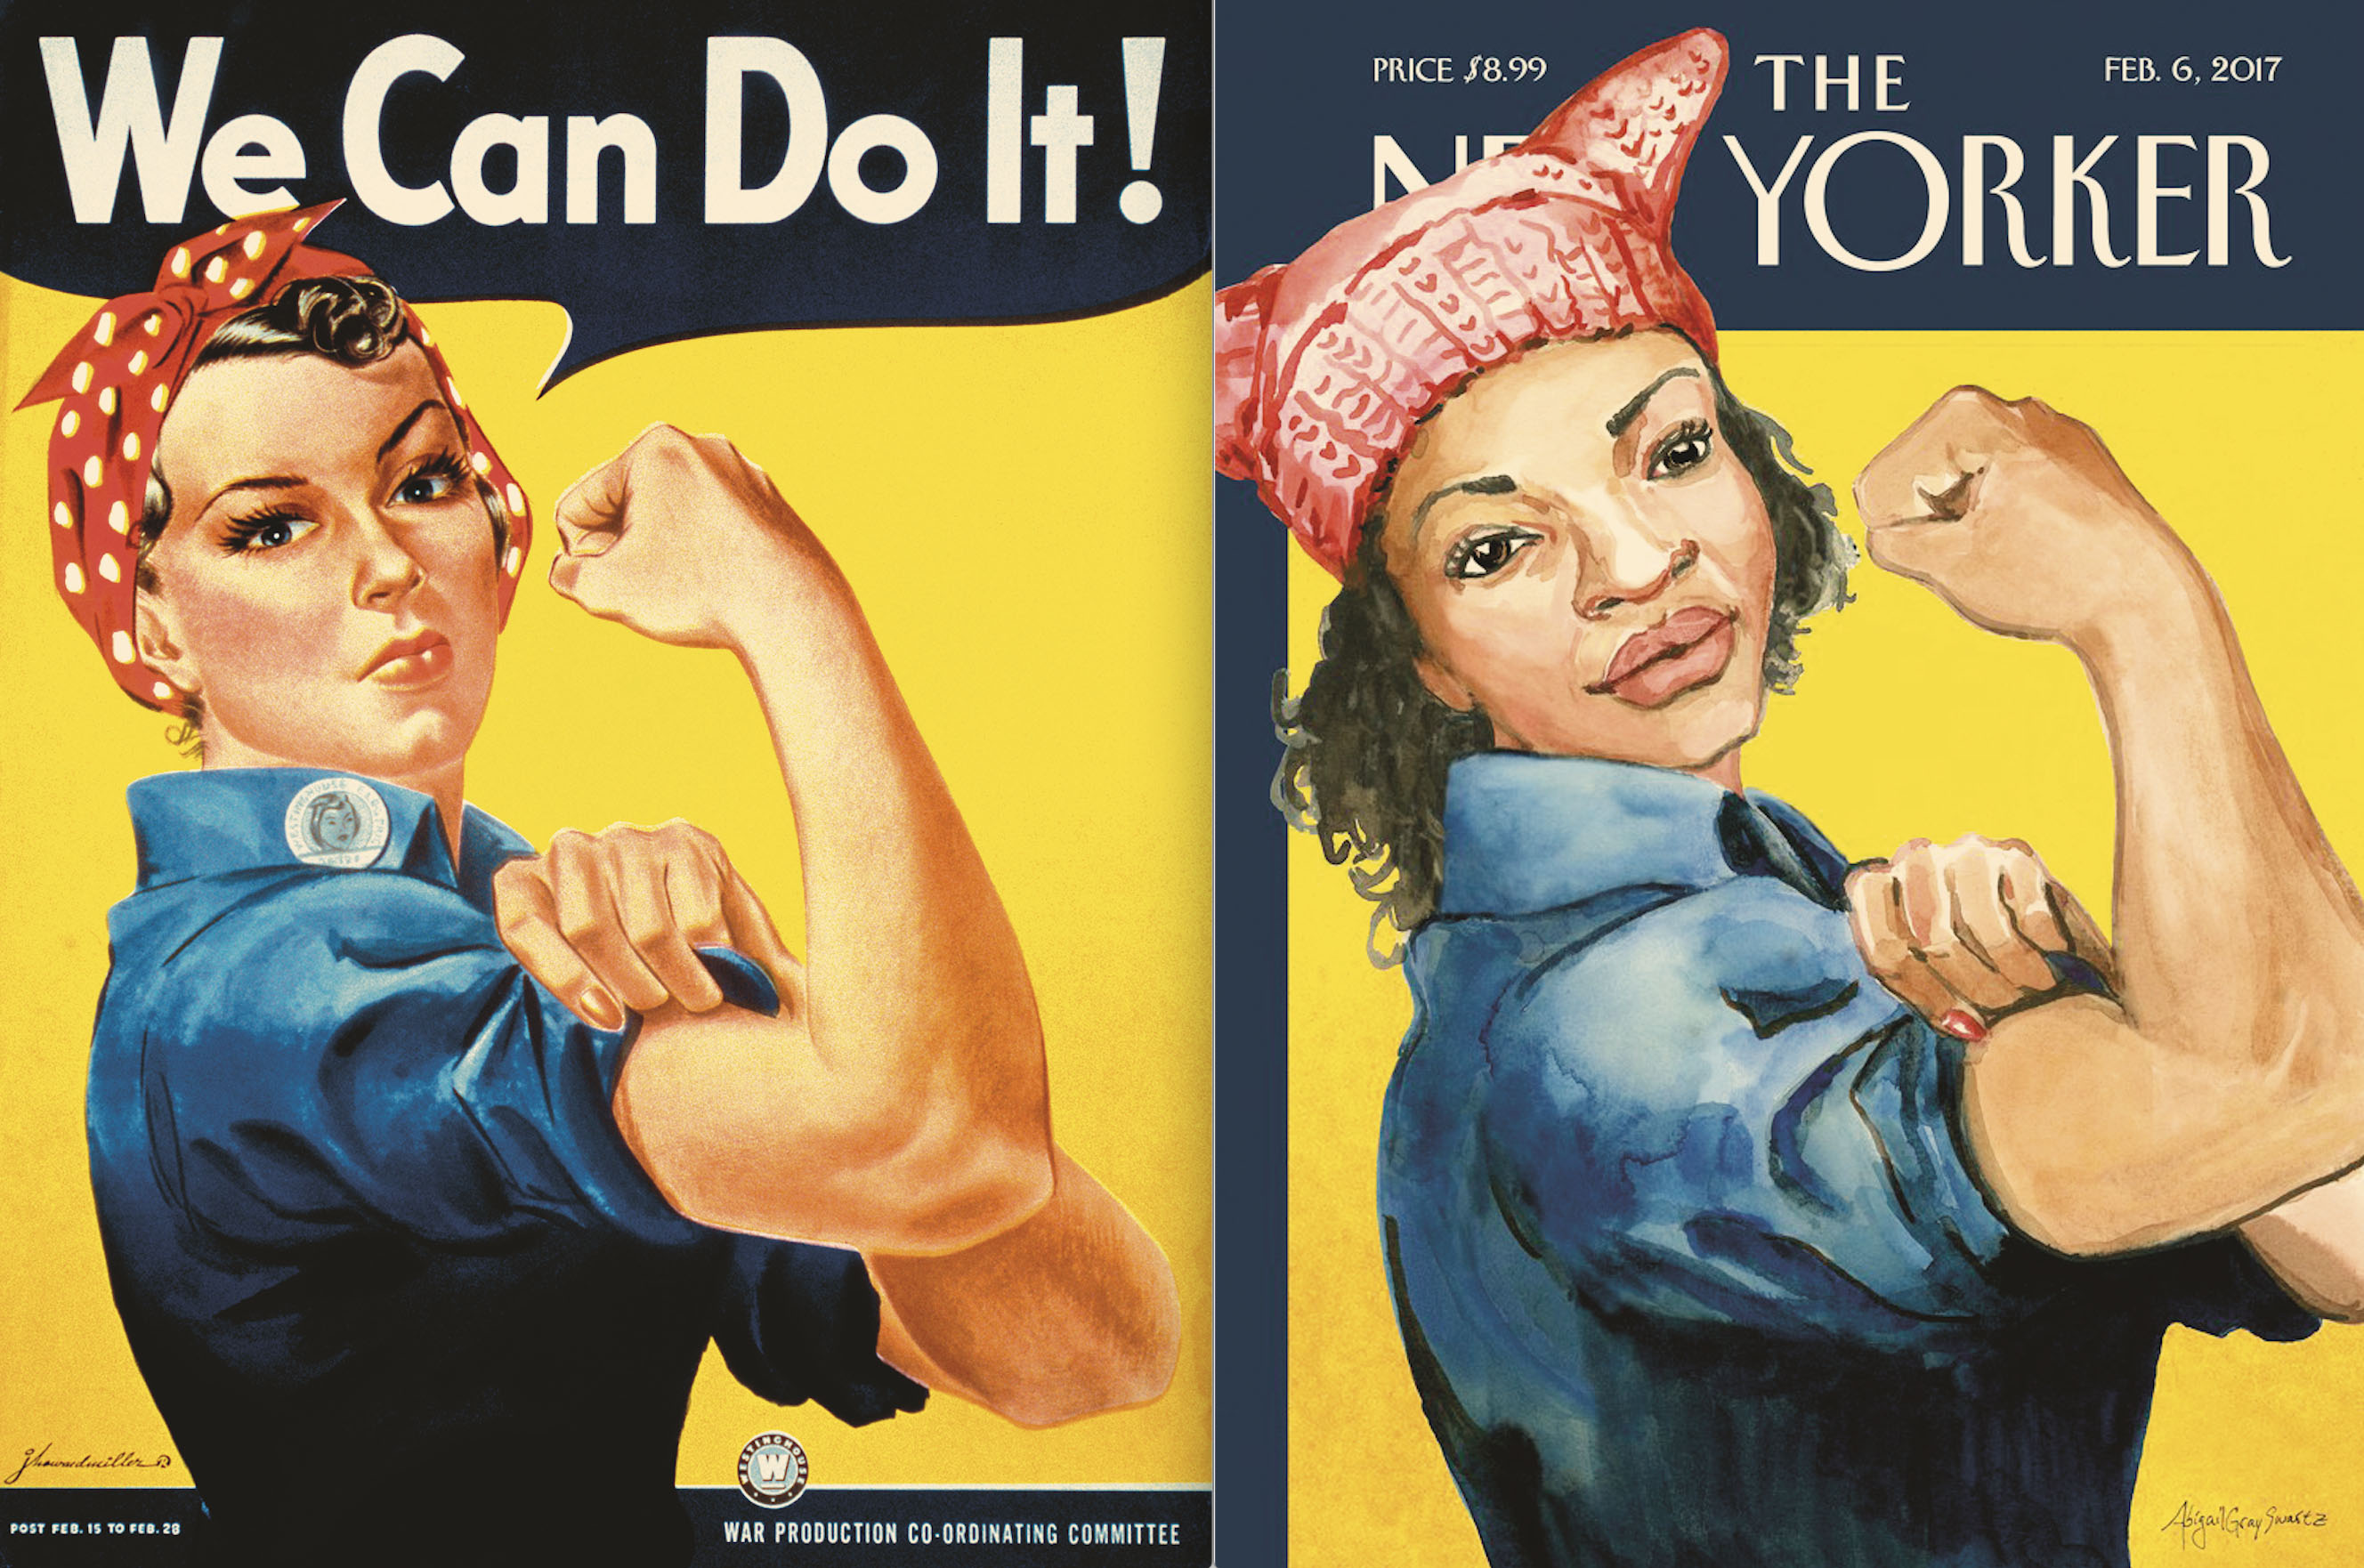 Modern we can. Клепальщица Рози плакат. Клепальщицы Рози (Rosie the Riveter). Плакат «we can do it! ». Rosie the Riveter плакат СССР.